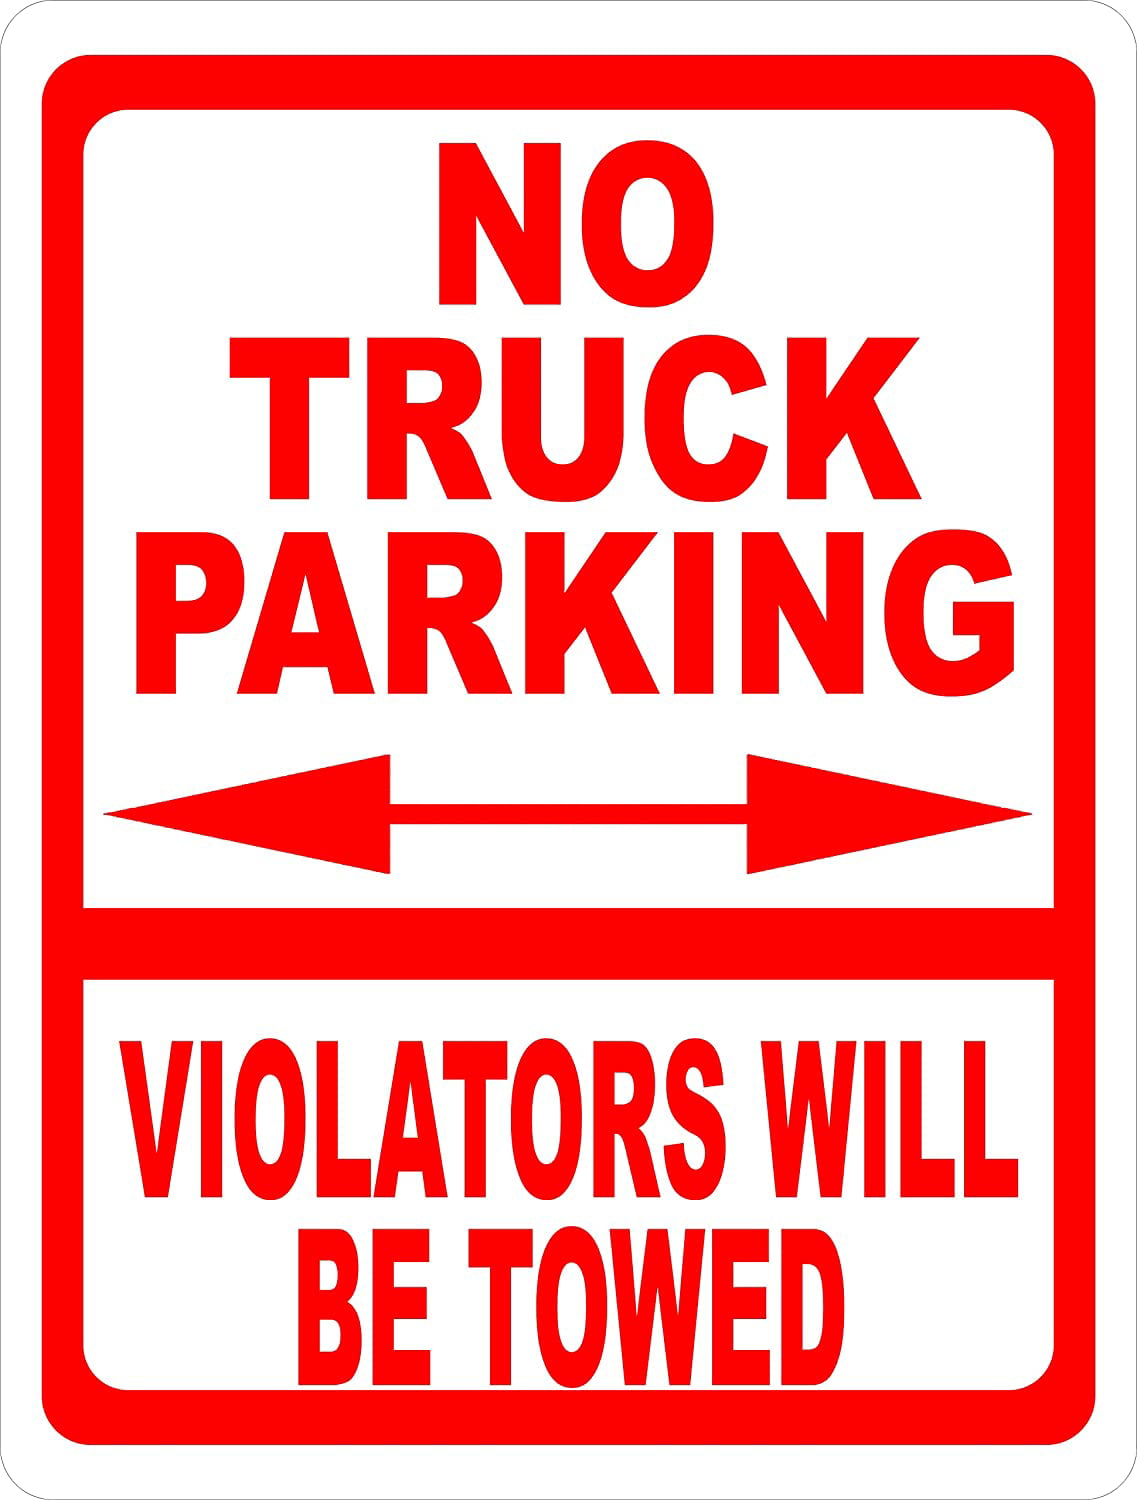 No Truck Parking Violators Will Be Towed Aluminum Metal 8x12 Sign 